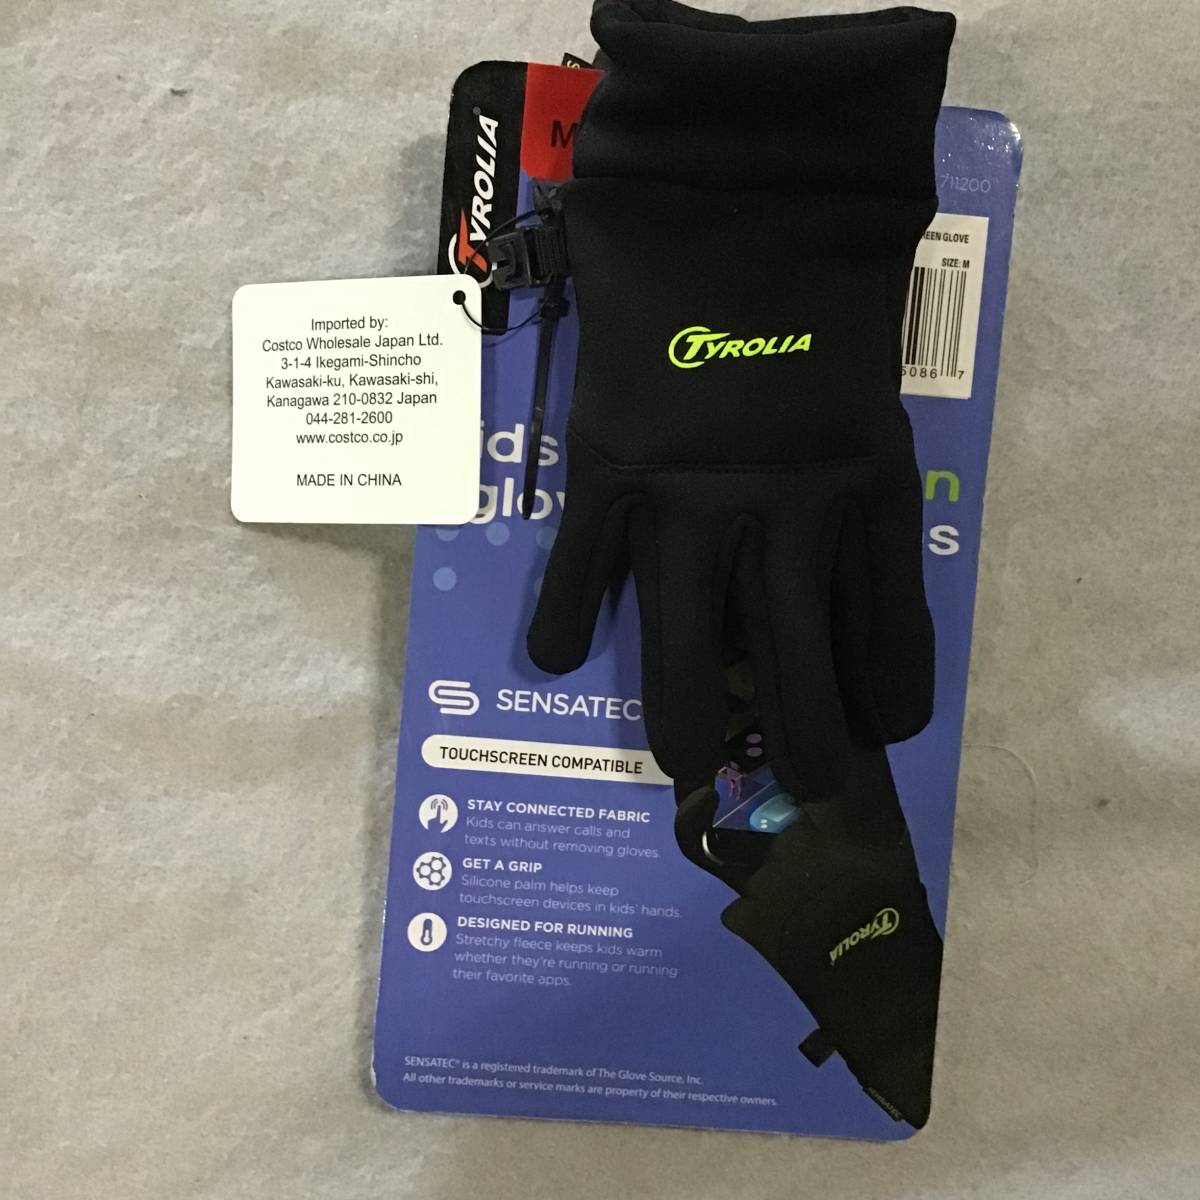 [*H 10204] new goods unused Chiroria Kids glove mitten touch screen correspondence gloves cost ko stock 36 set present flima gift 